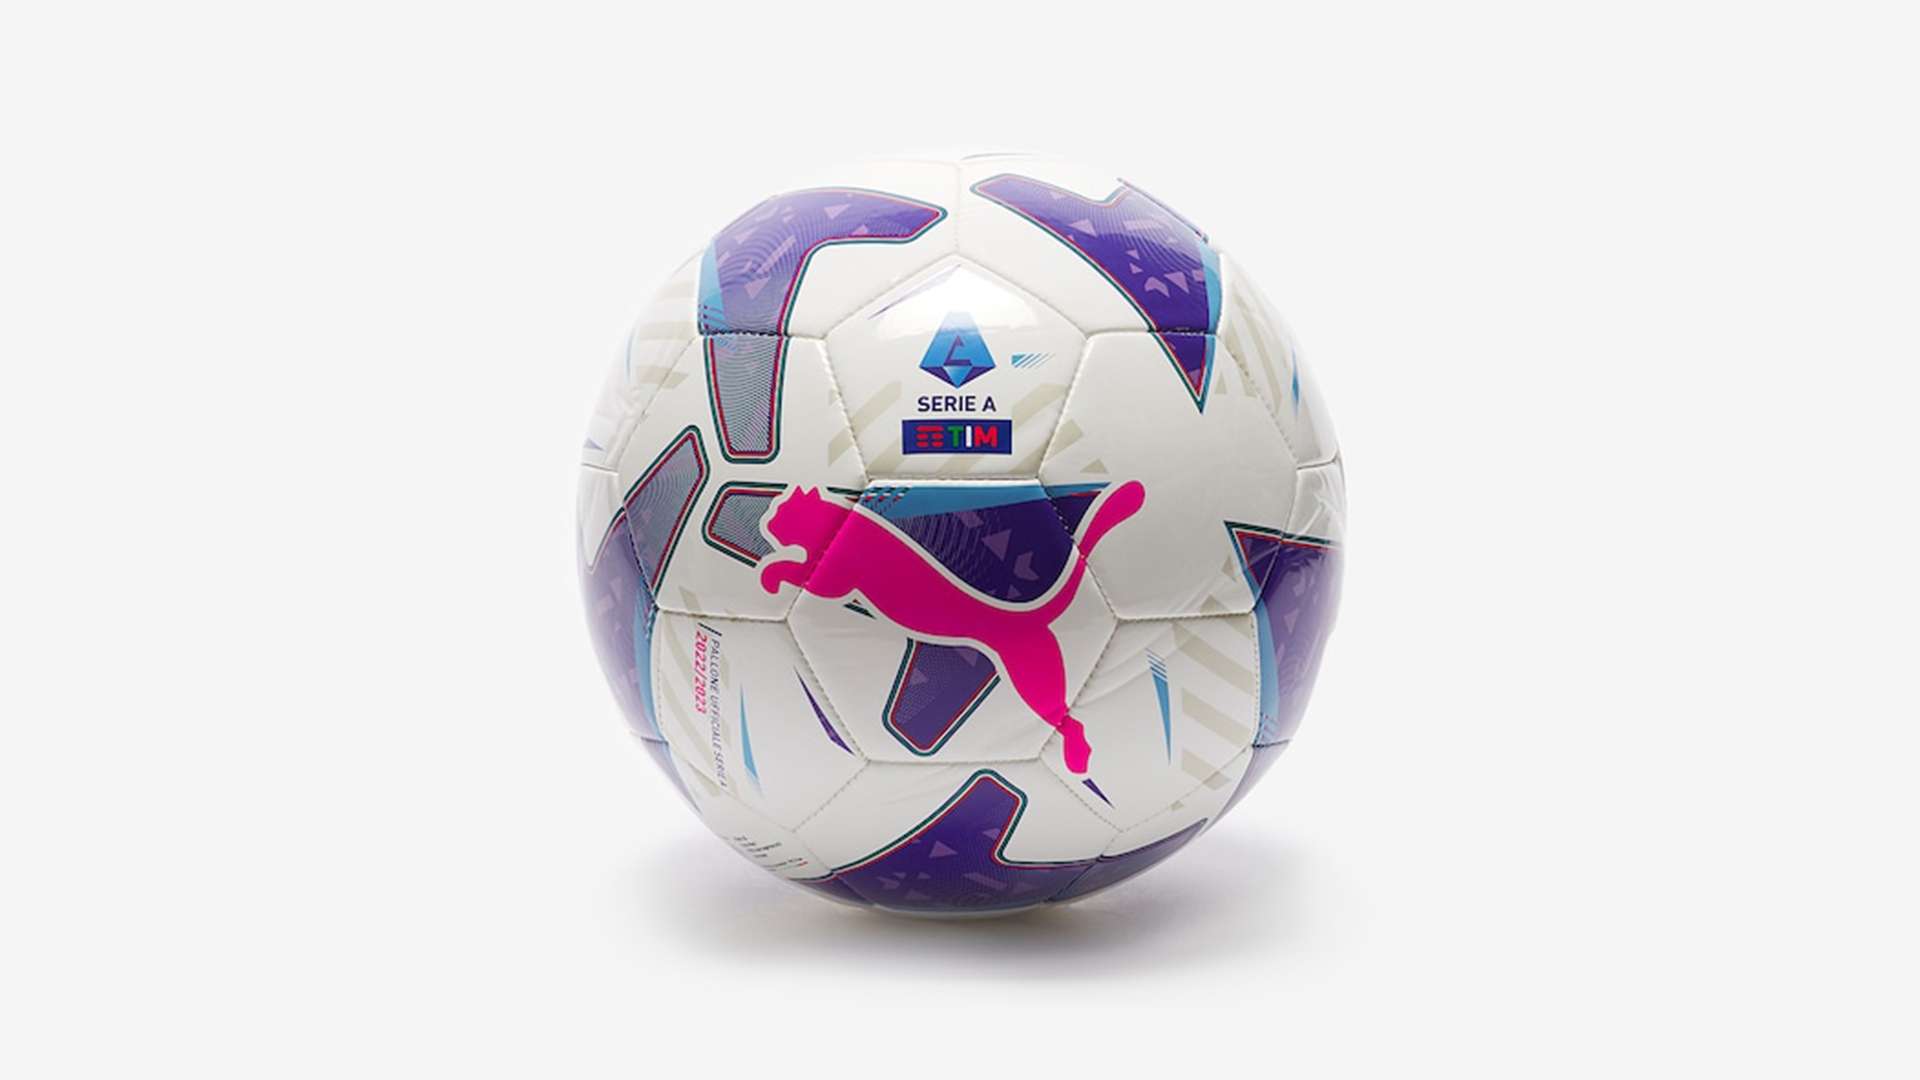 Puma Orbita Serie A replica ball